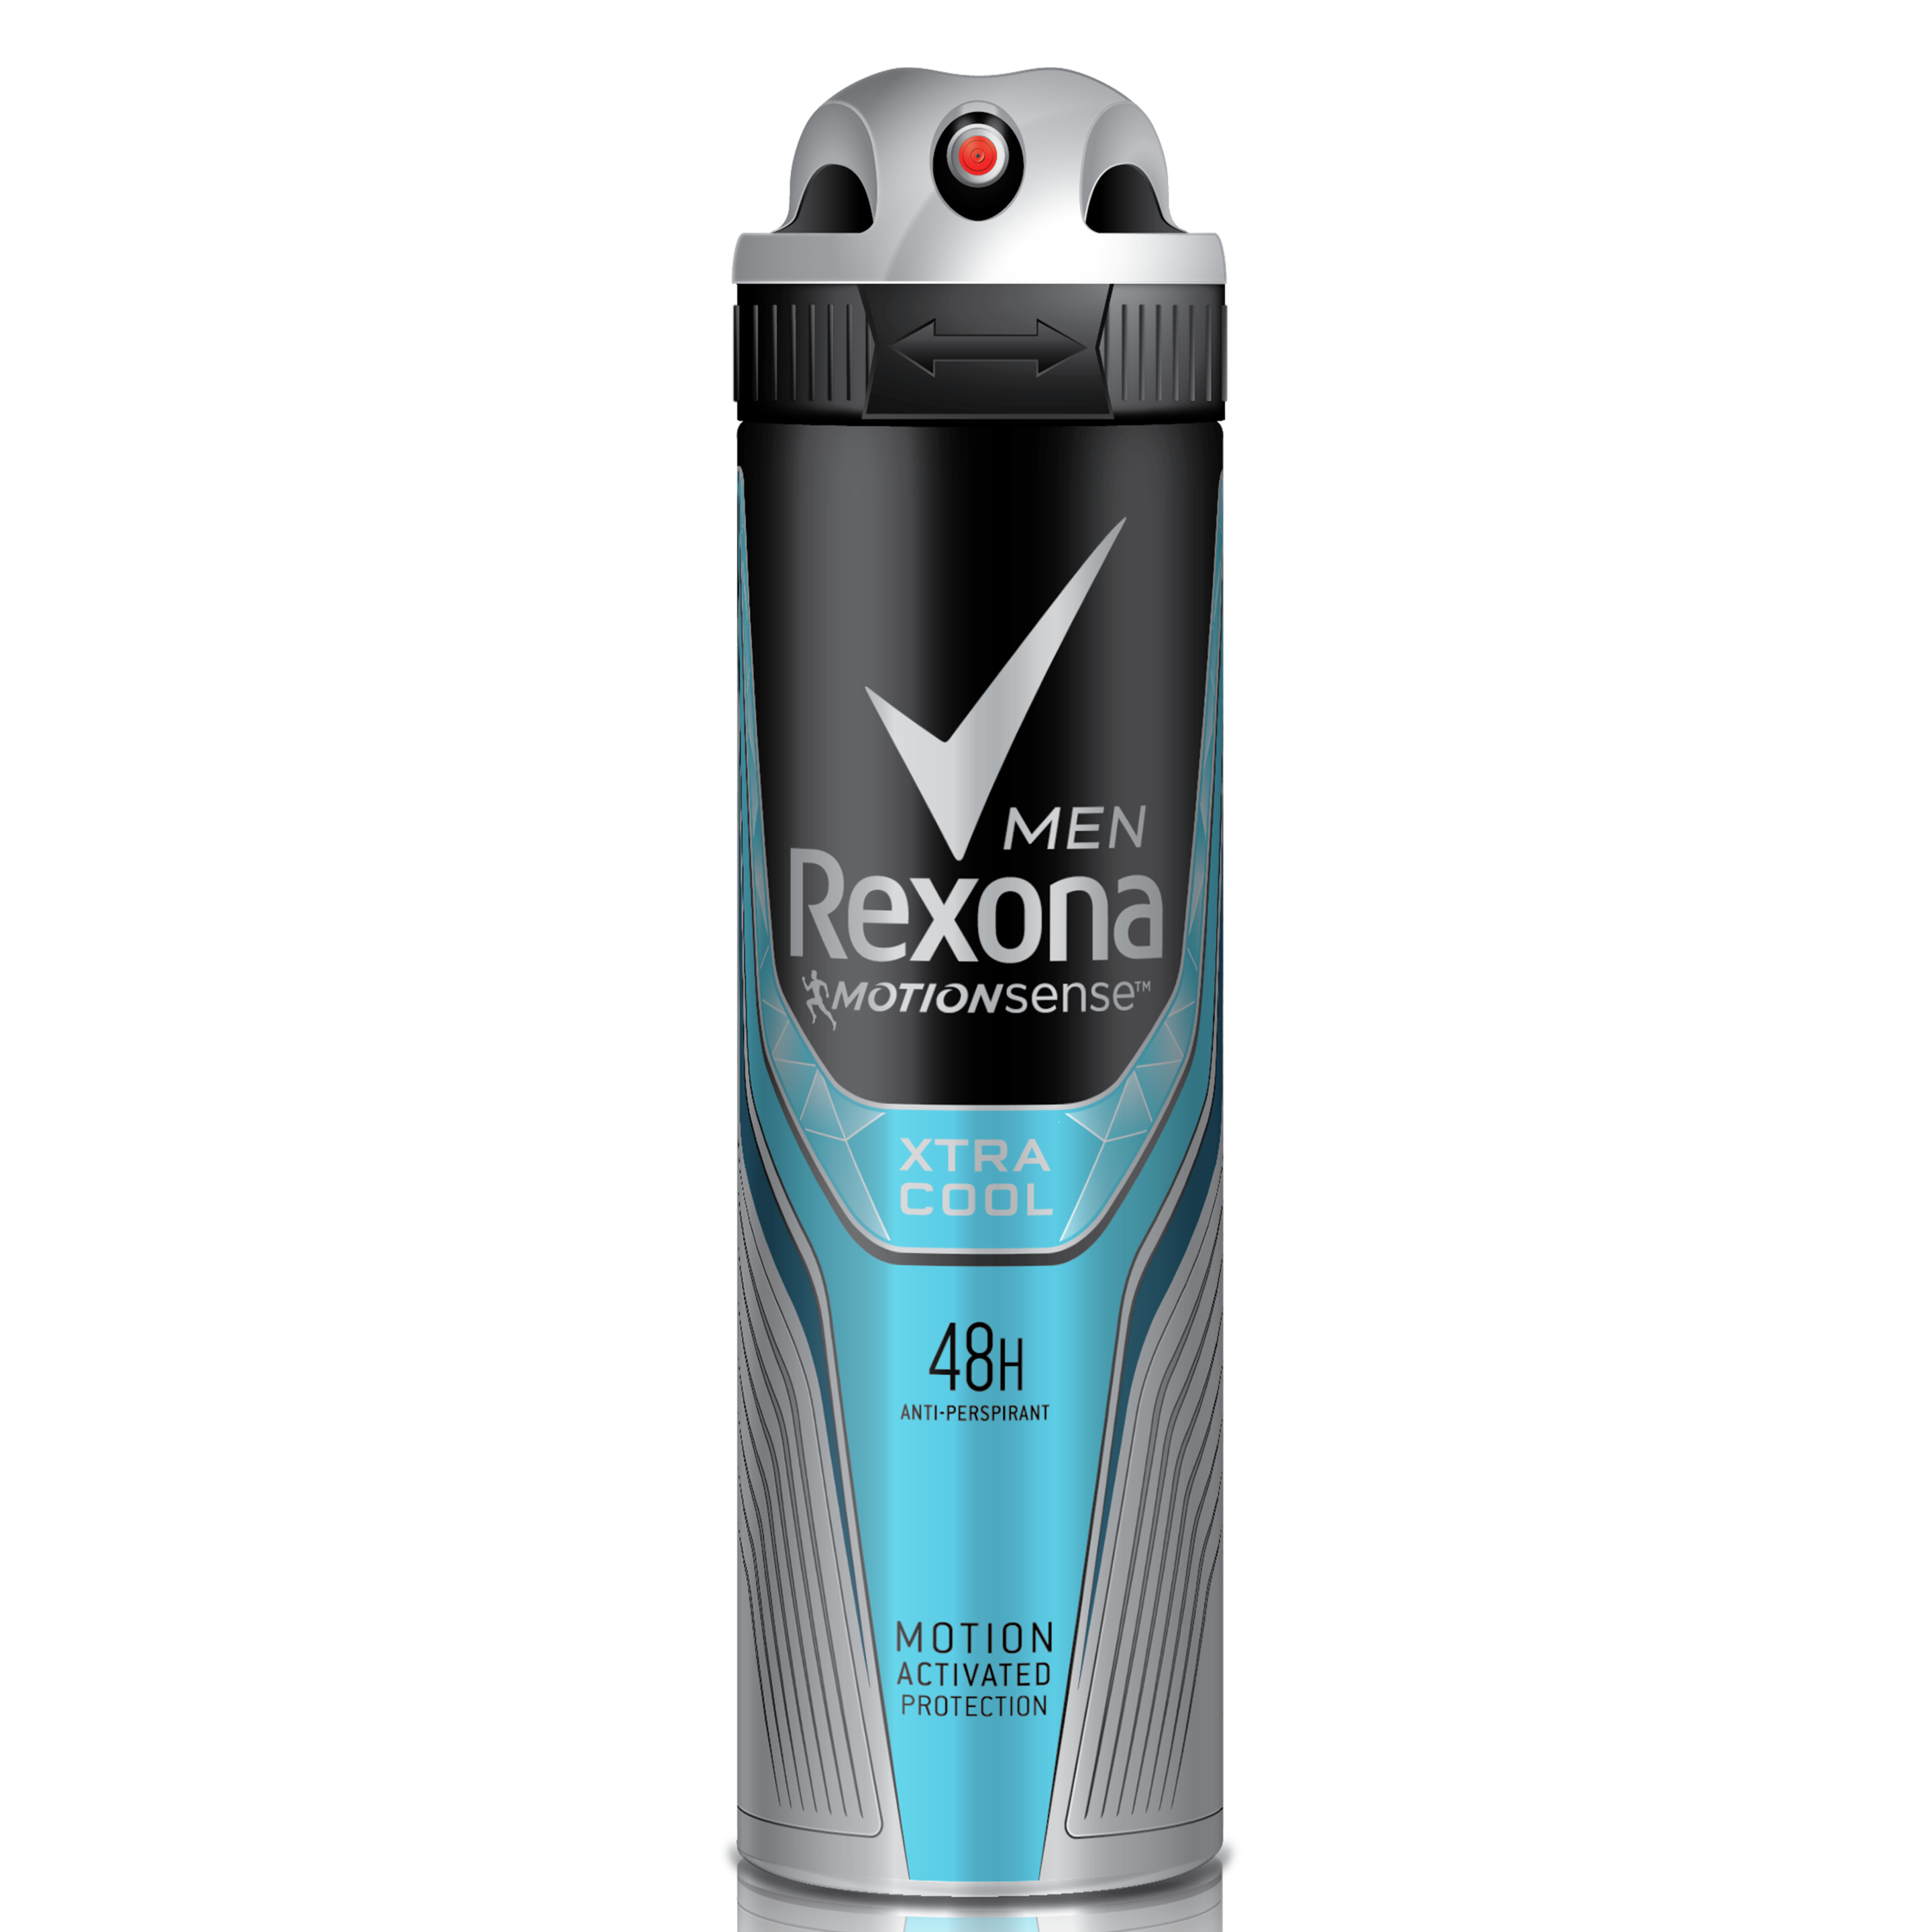 Men Xtra Cool Antiperspirant MotionSense Deodorant 150ml